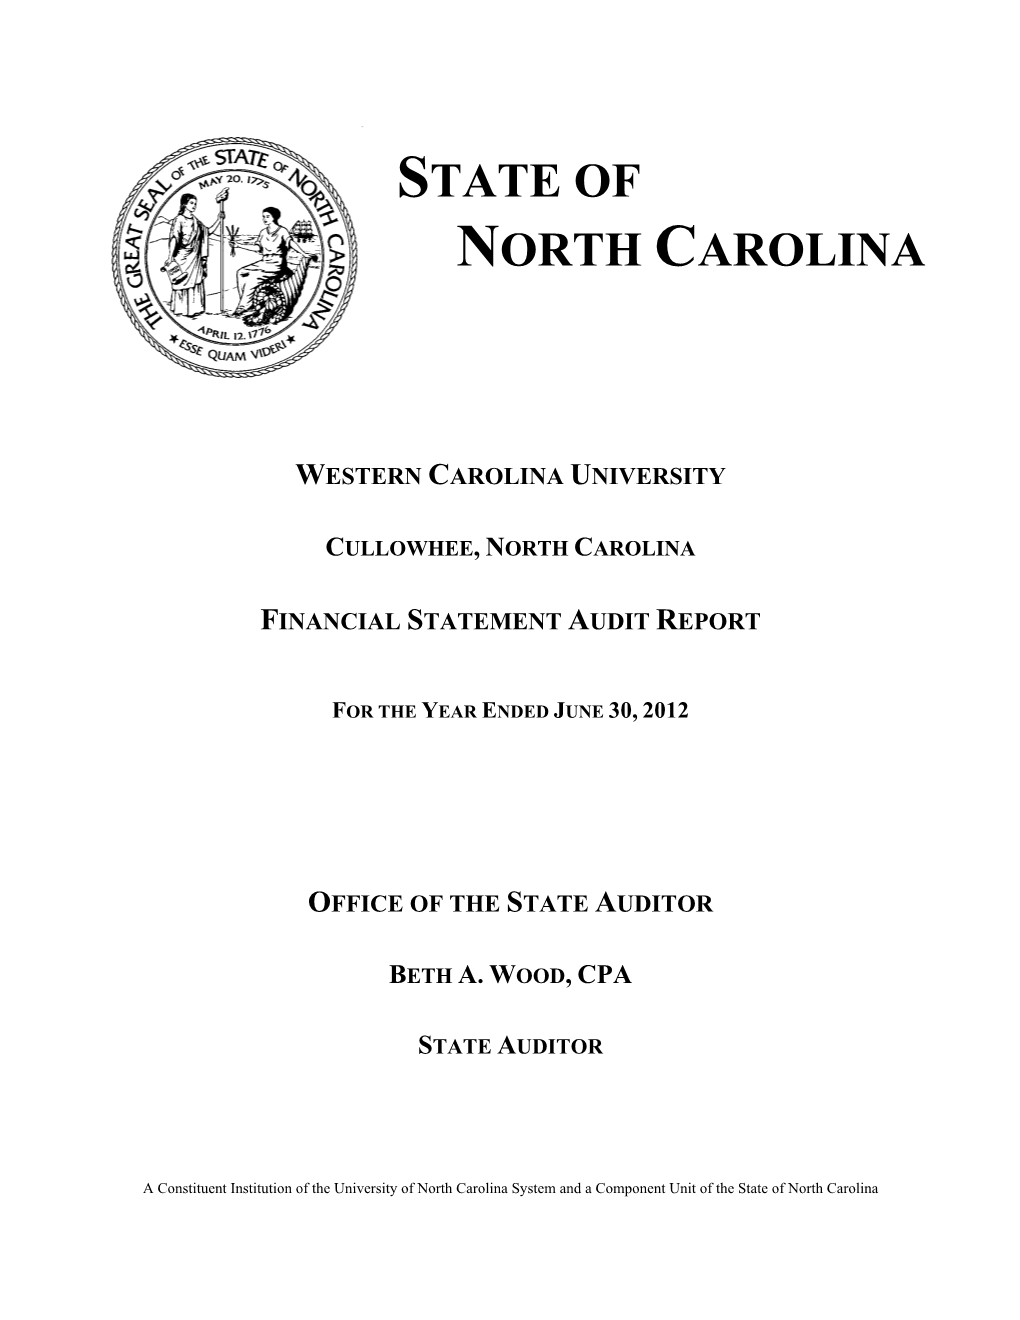 2012 Financial Statement Audit Report